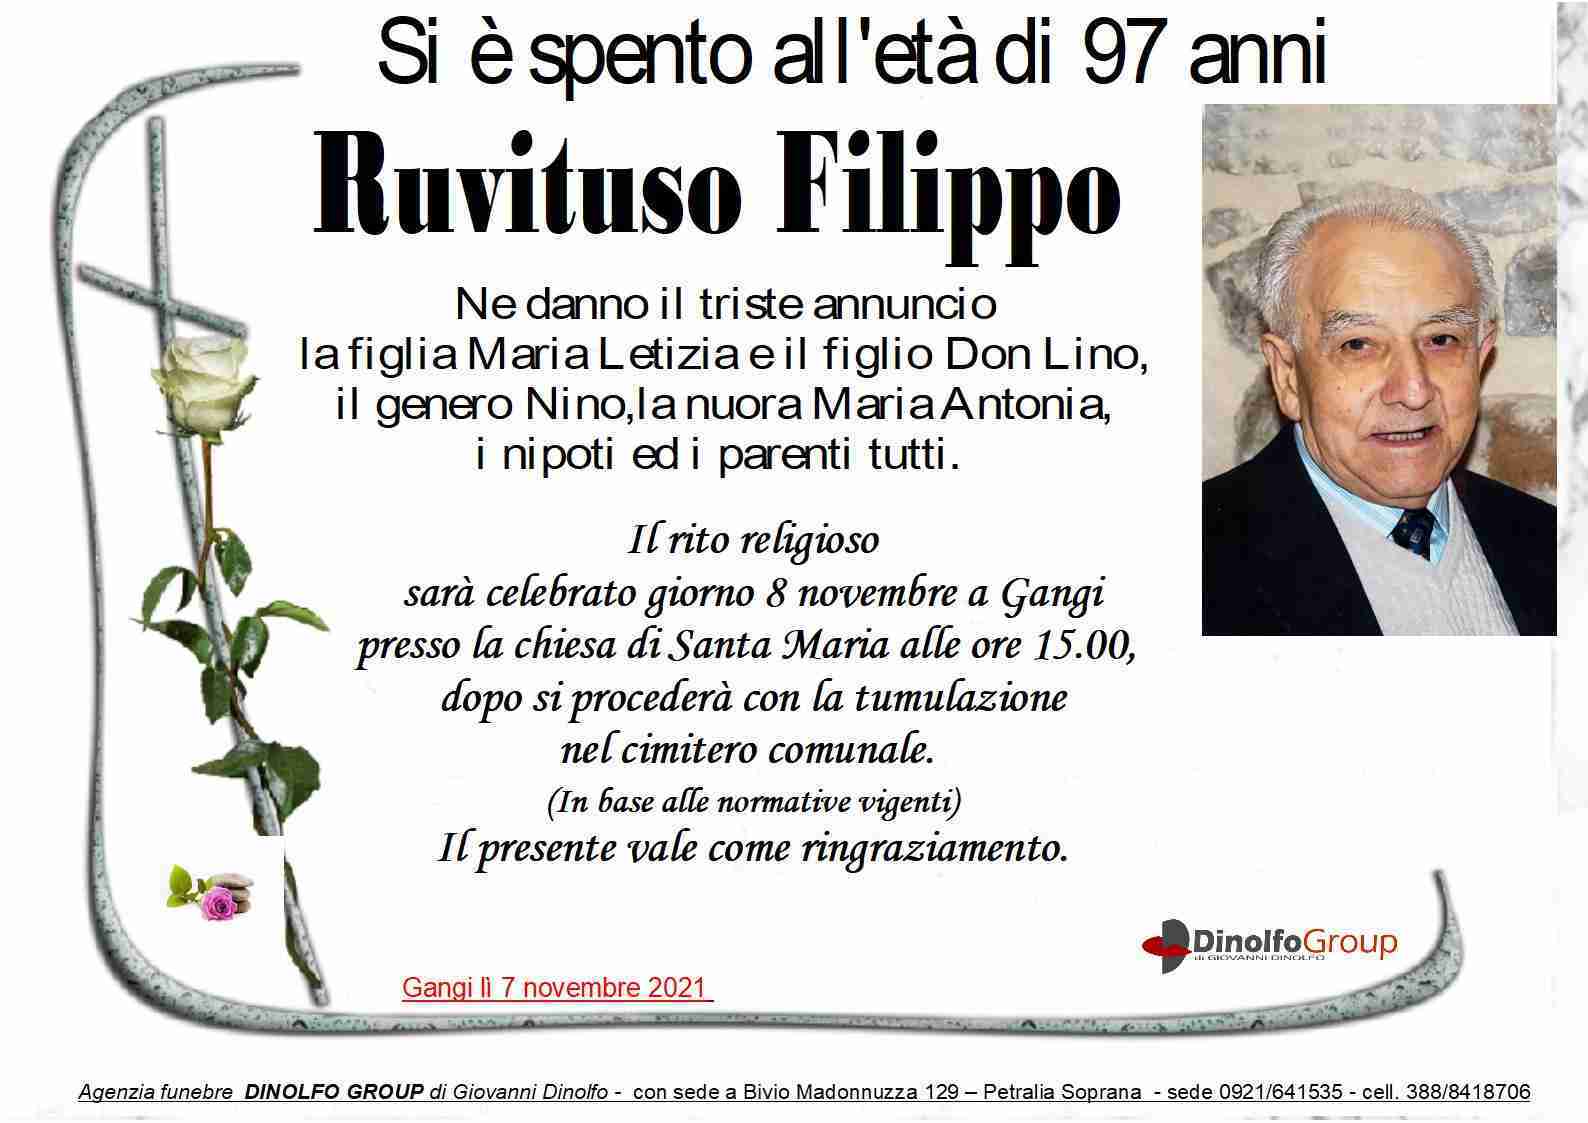 Filippo Ruvituso